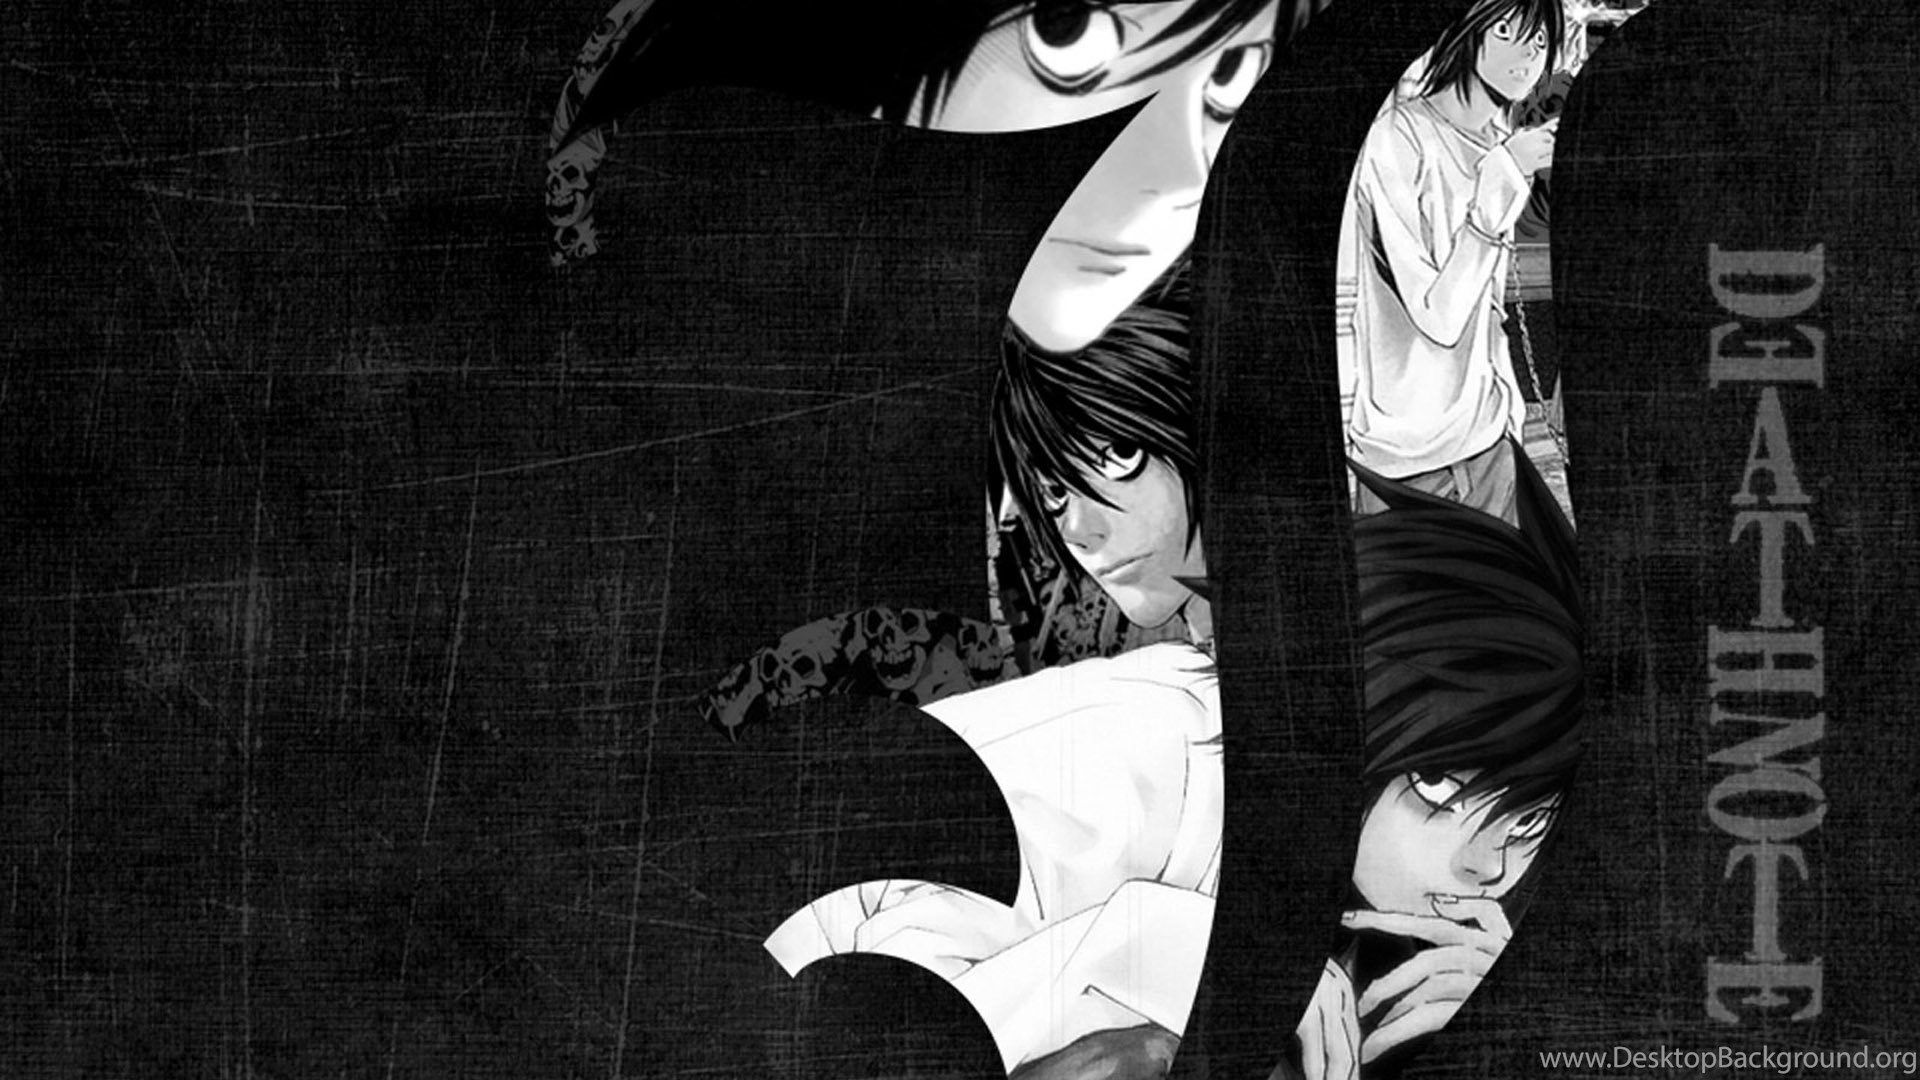 HD desktop wallpaper: Anime, Death Note download free picture #775316